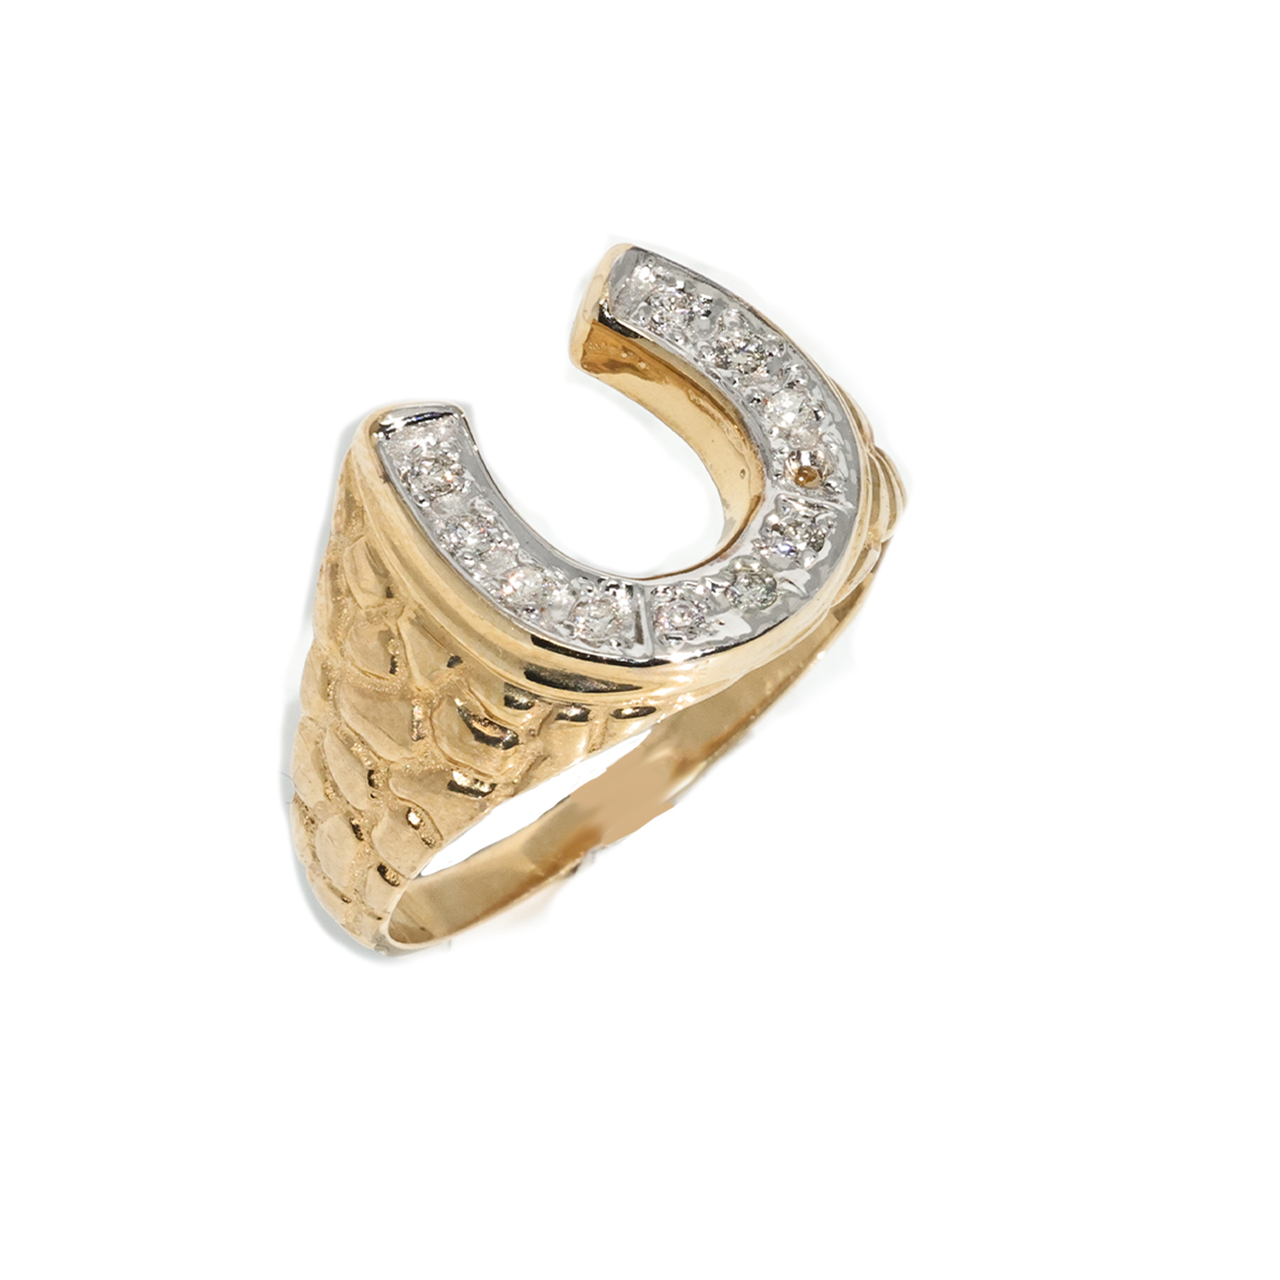 8 / White 14K Yellow Gold Horse Shoe Ring 0.54 Ctw